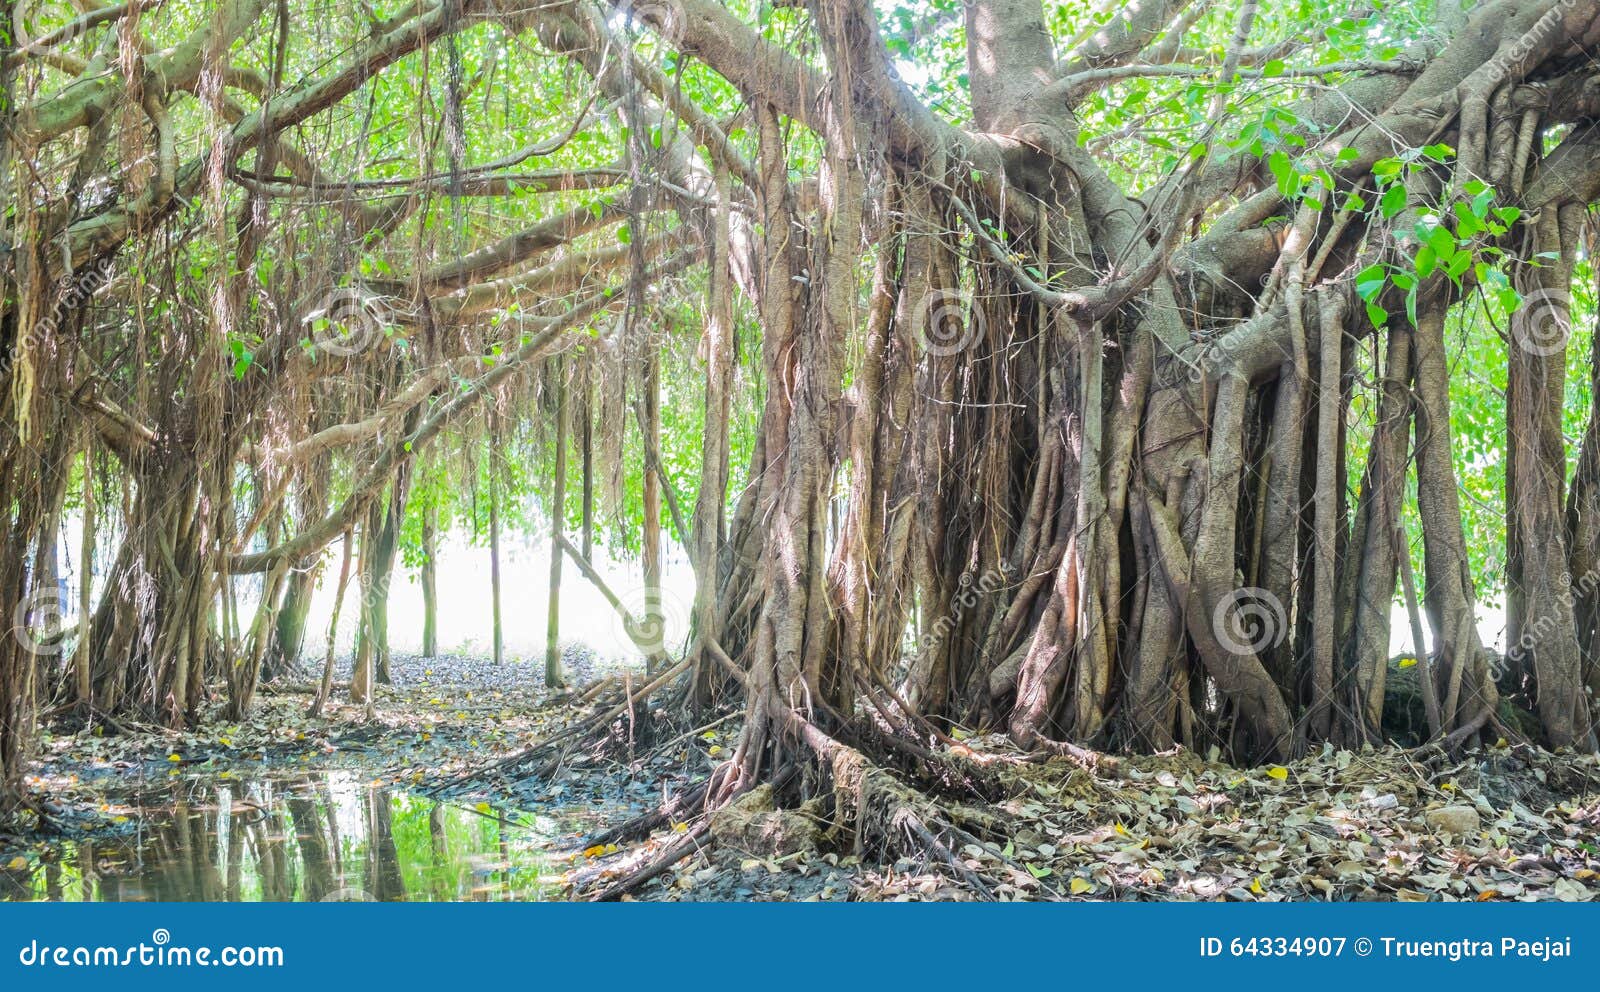 photo stock banian trs grand dans la jungle arbre de la vie banya stupfiant image